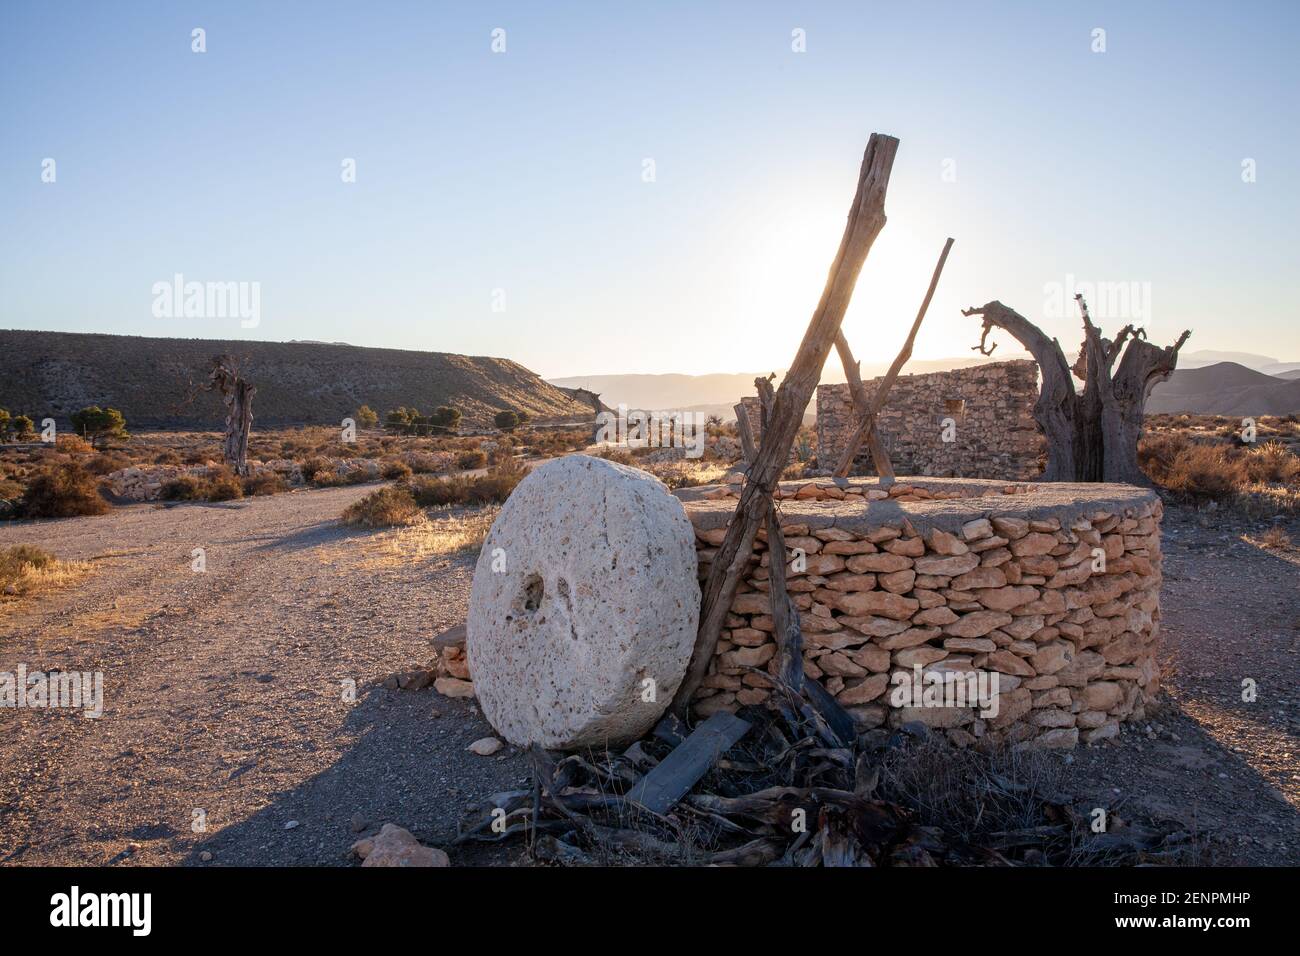 Filming locations film studios In the Tabernas desert Spain Stock Photo